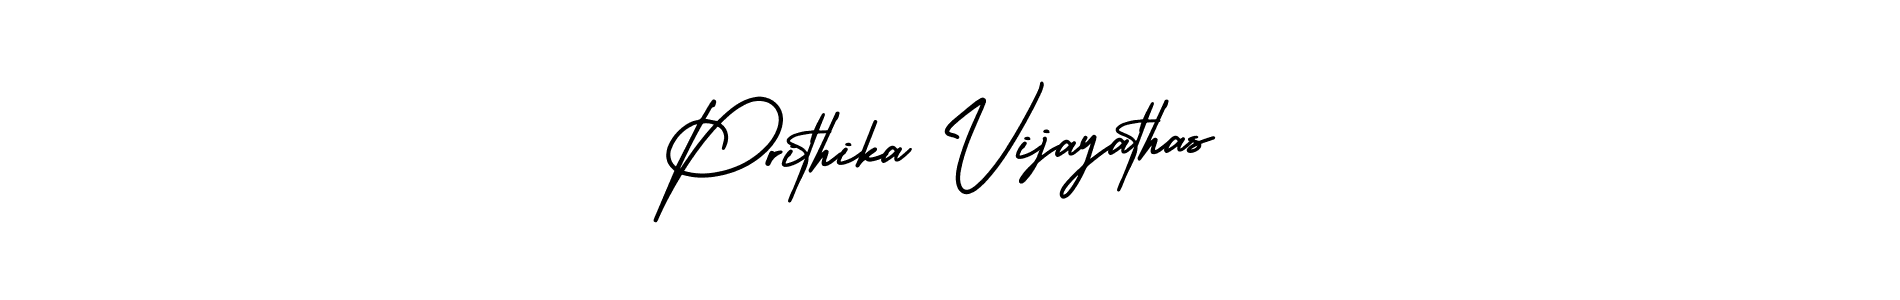 How to Draw Prithika Vijayathas signature style? AmerikaSignatureDemo-Regular is a latest design signature styles for name Prithika Vijayathas. Prithika Vijayathas signature style 3 images and pictures png